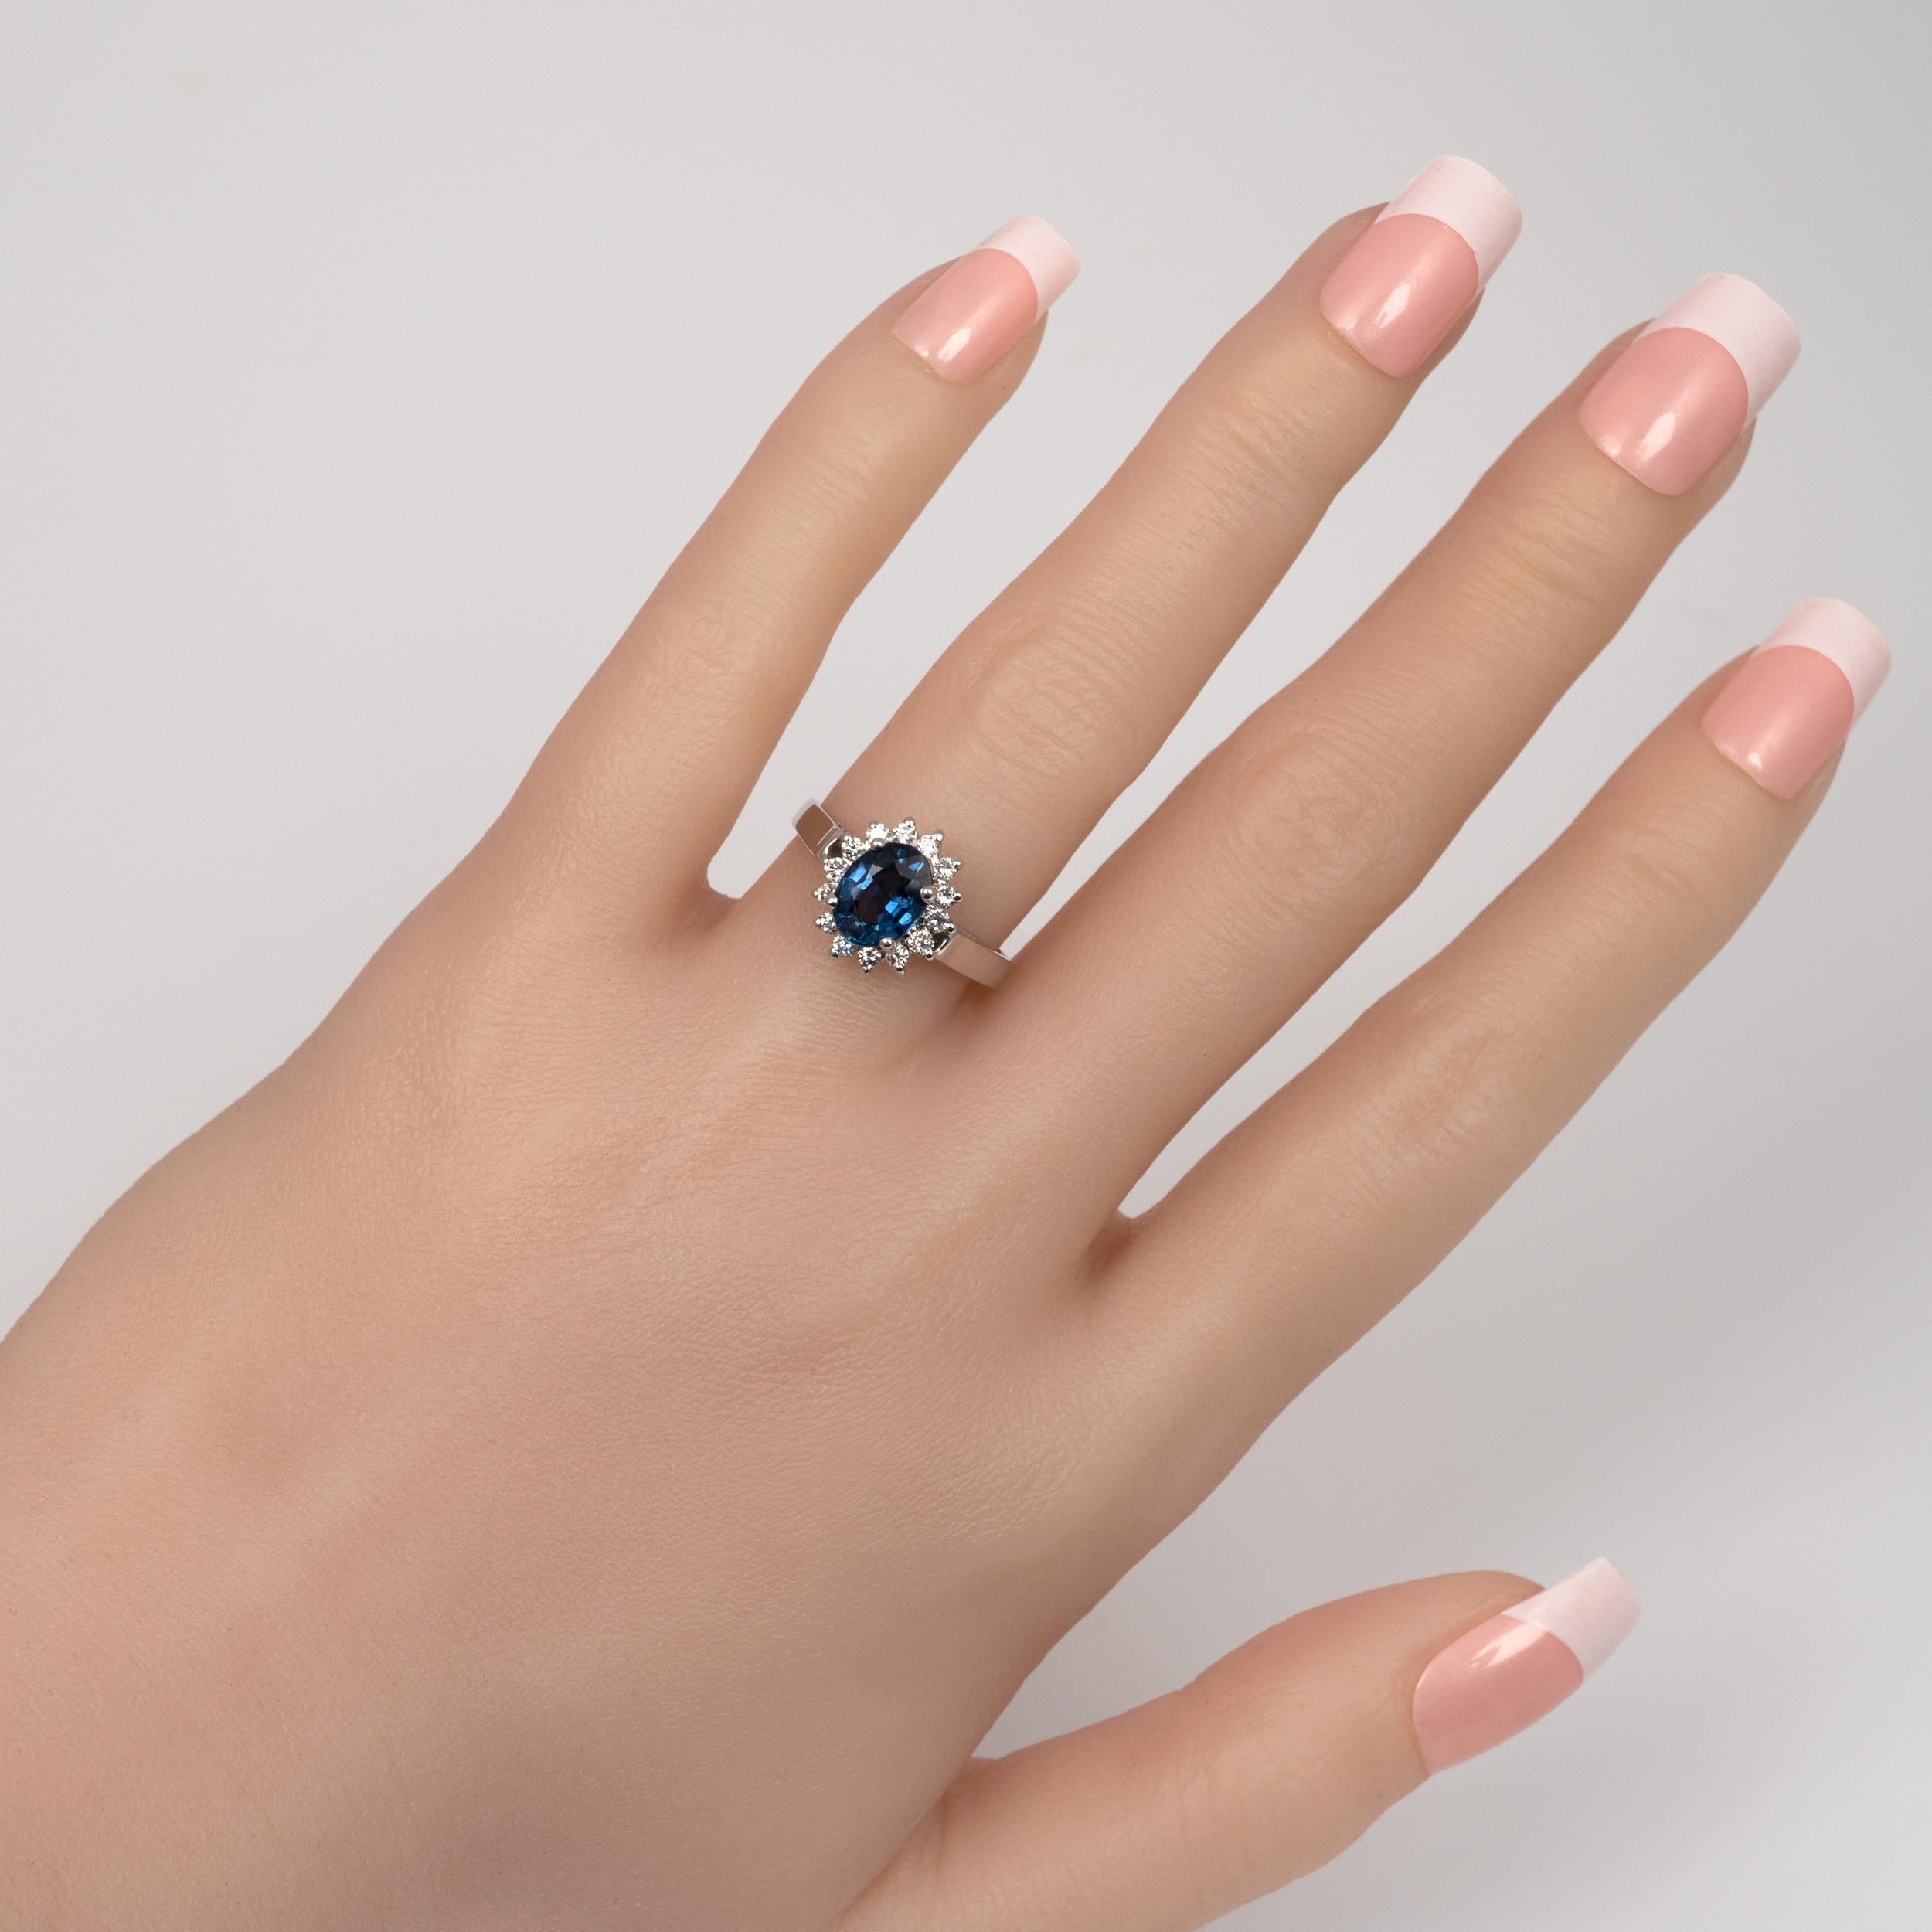 Oval Cut Certified Sapphire Diamond Halo Ring 18 Karat White Gold UK Hallmarks For Sale